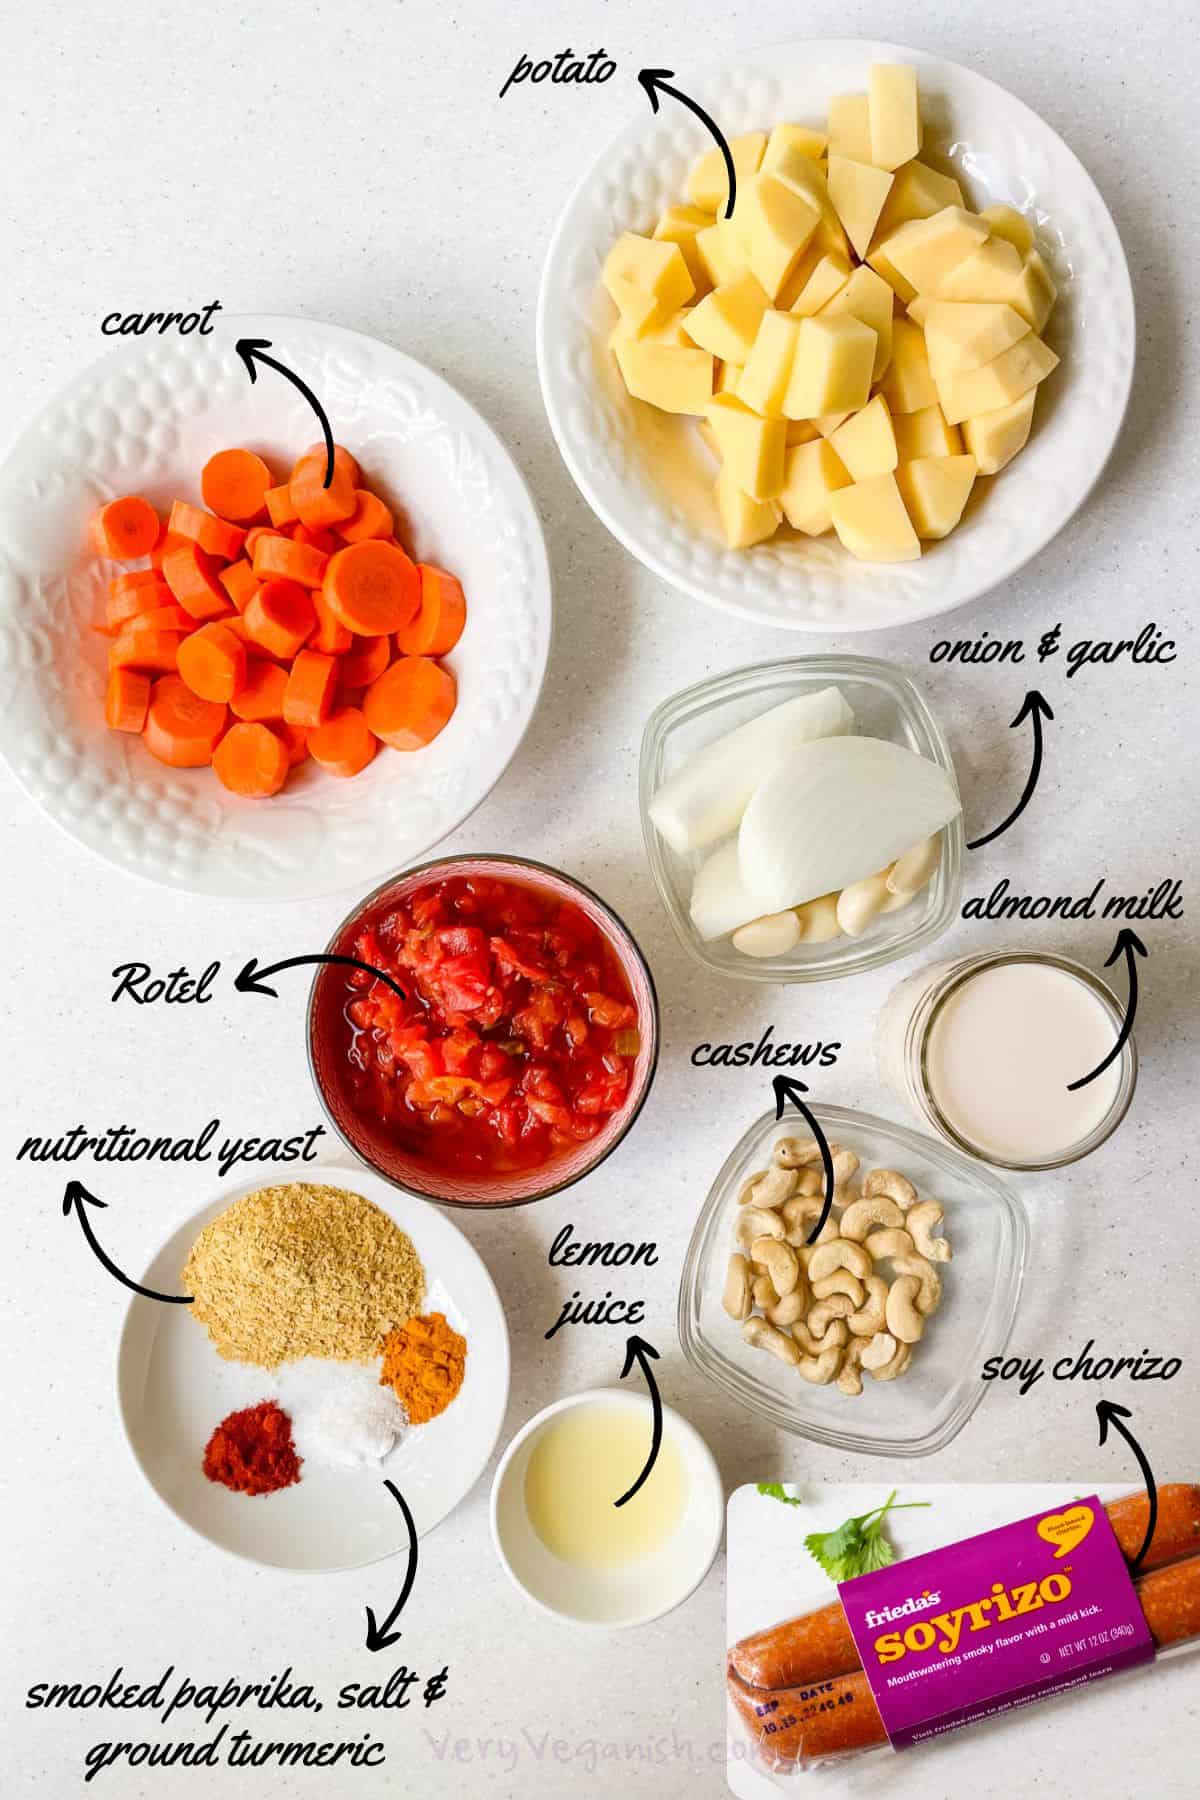 Ingredients: soy chorizo, potato, carrot, onion, garlic, cashews, almond milk, rotel or salsa, nutritional yeast, lemon juice, salt, ground turmeric, smoked paprika